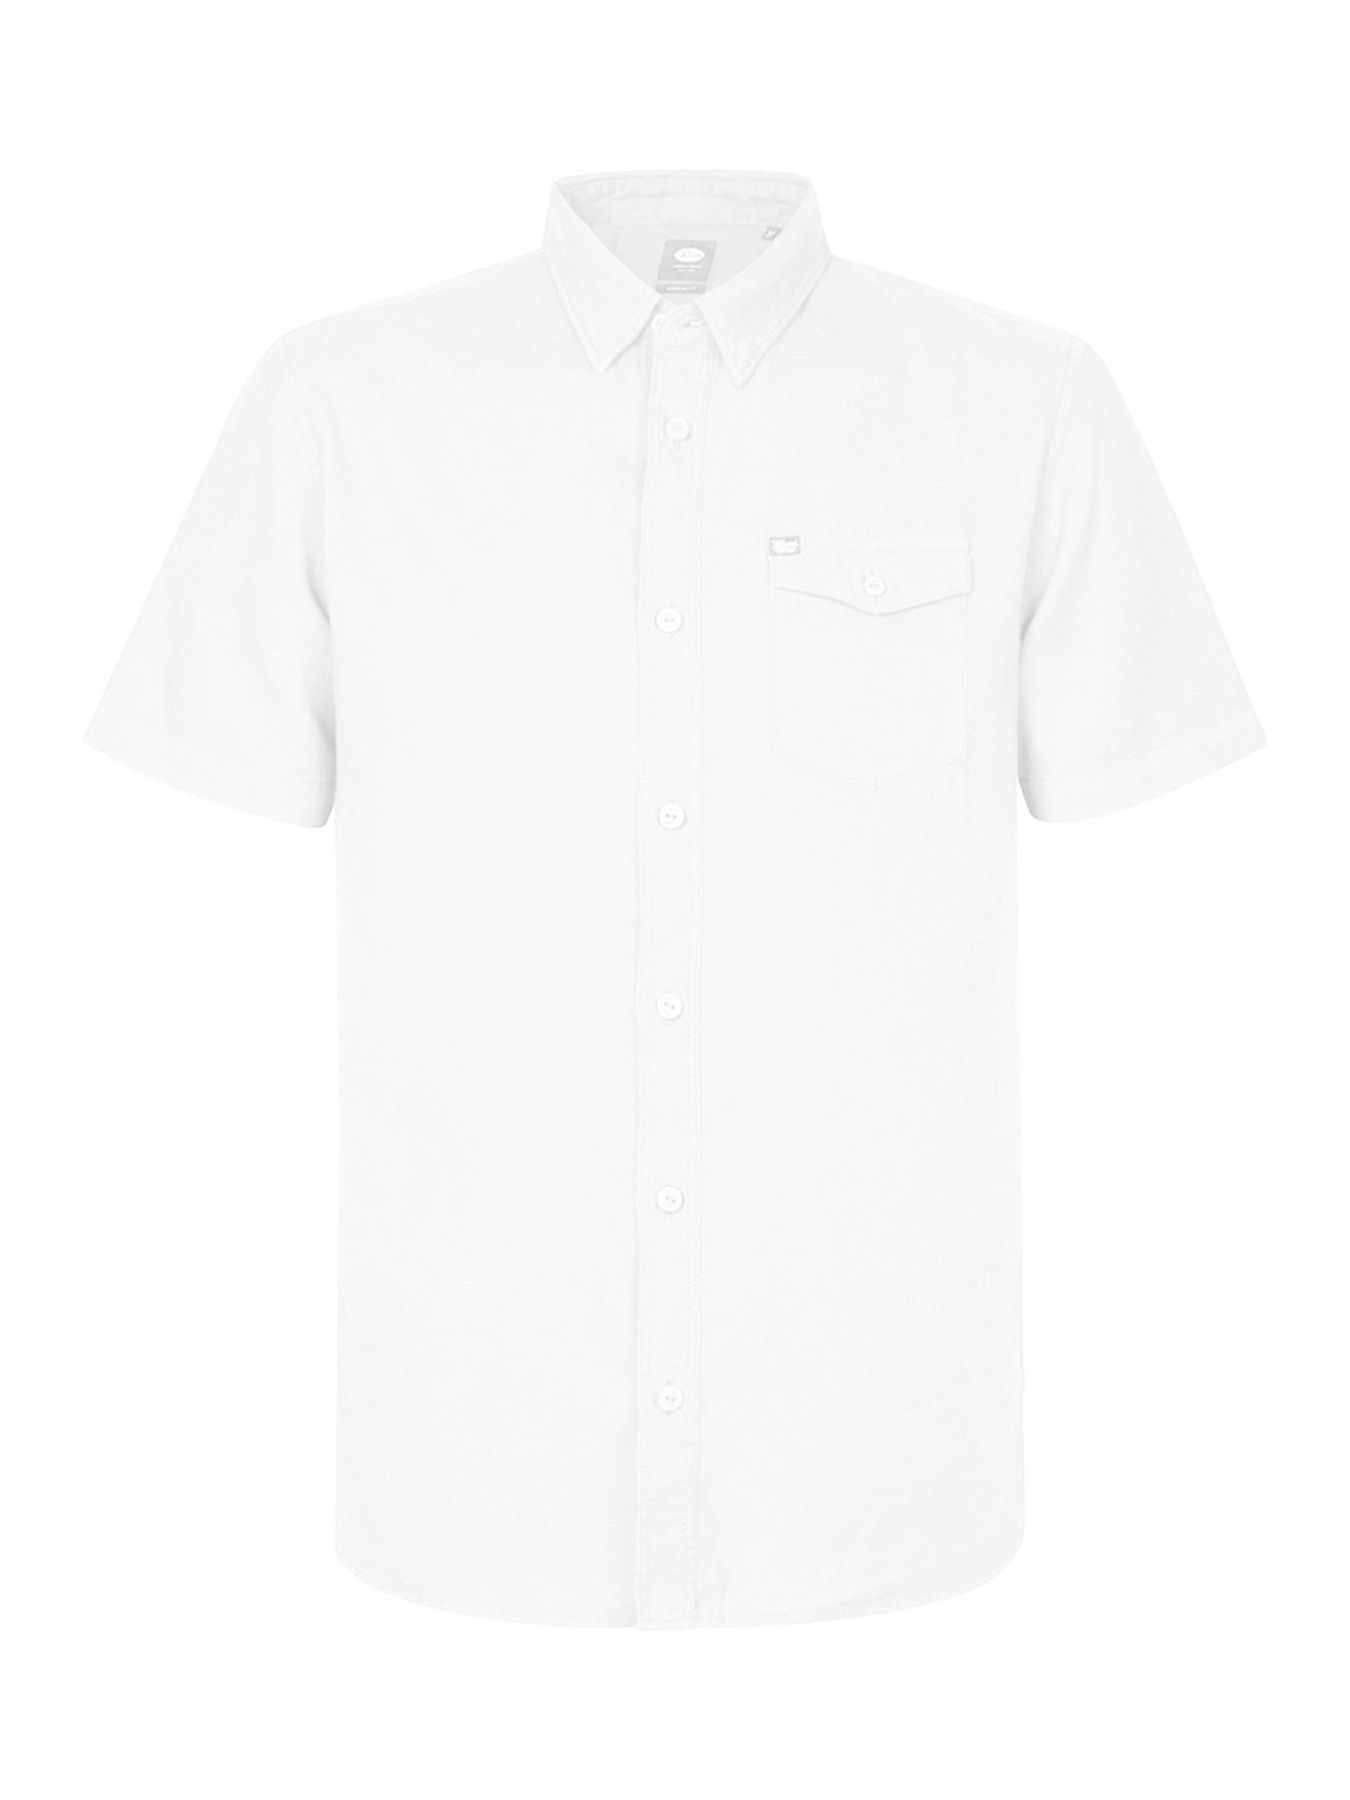 Petrol Industries Men Shirt Short Sleeve Uni Bright White0000 00106921-EKA26002700000018